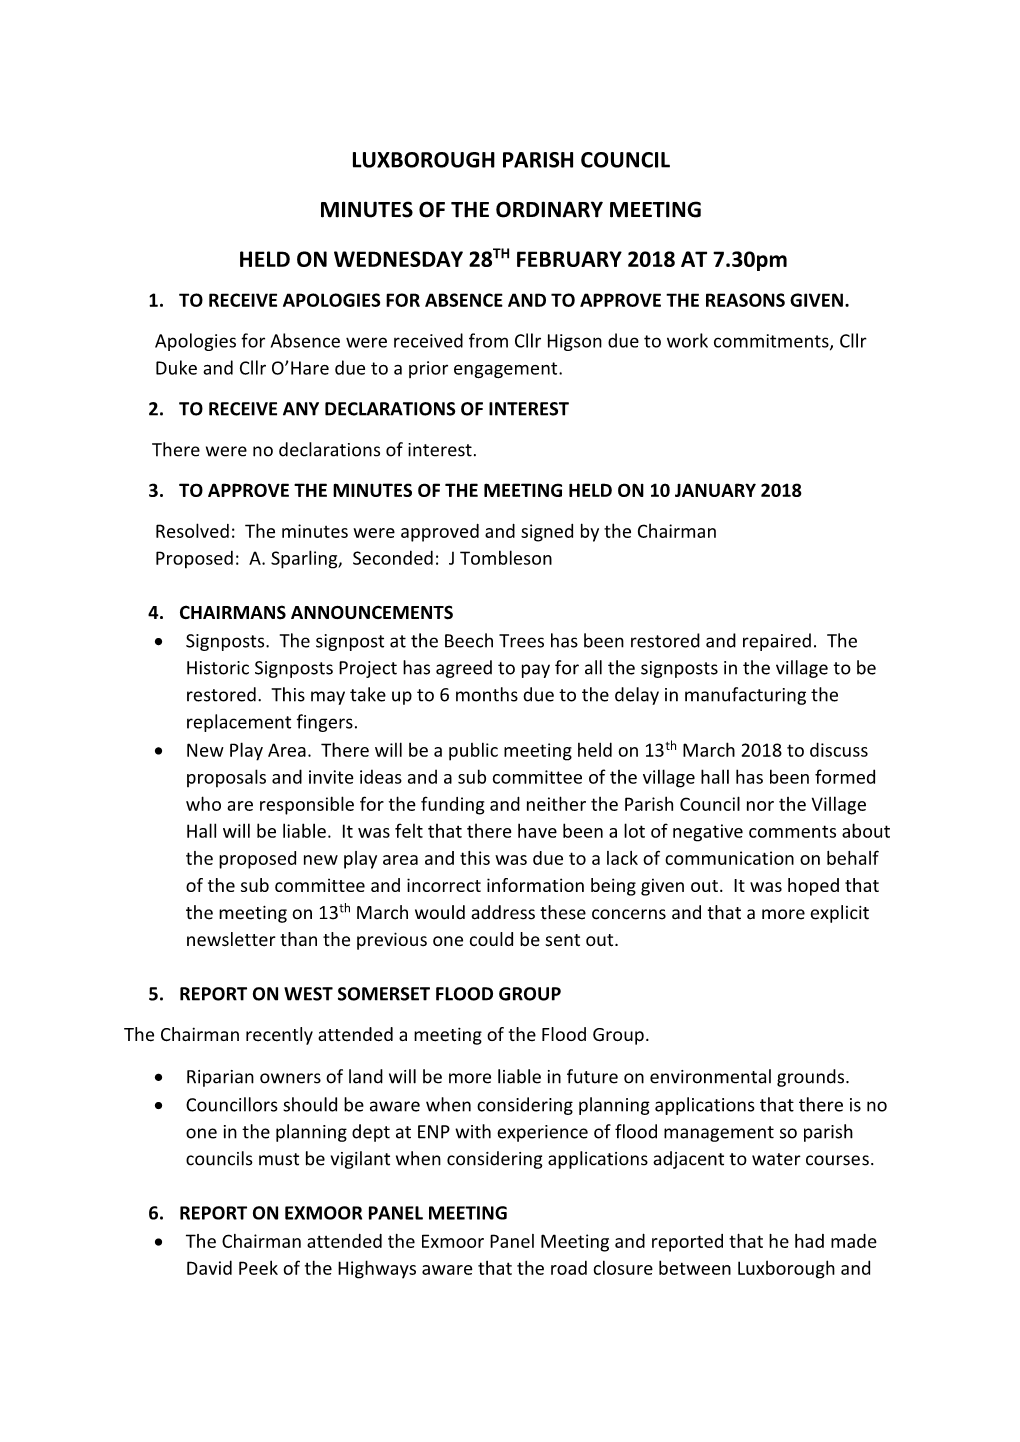 Luxborough Parish Council Minutes of the Ordinary